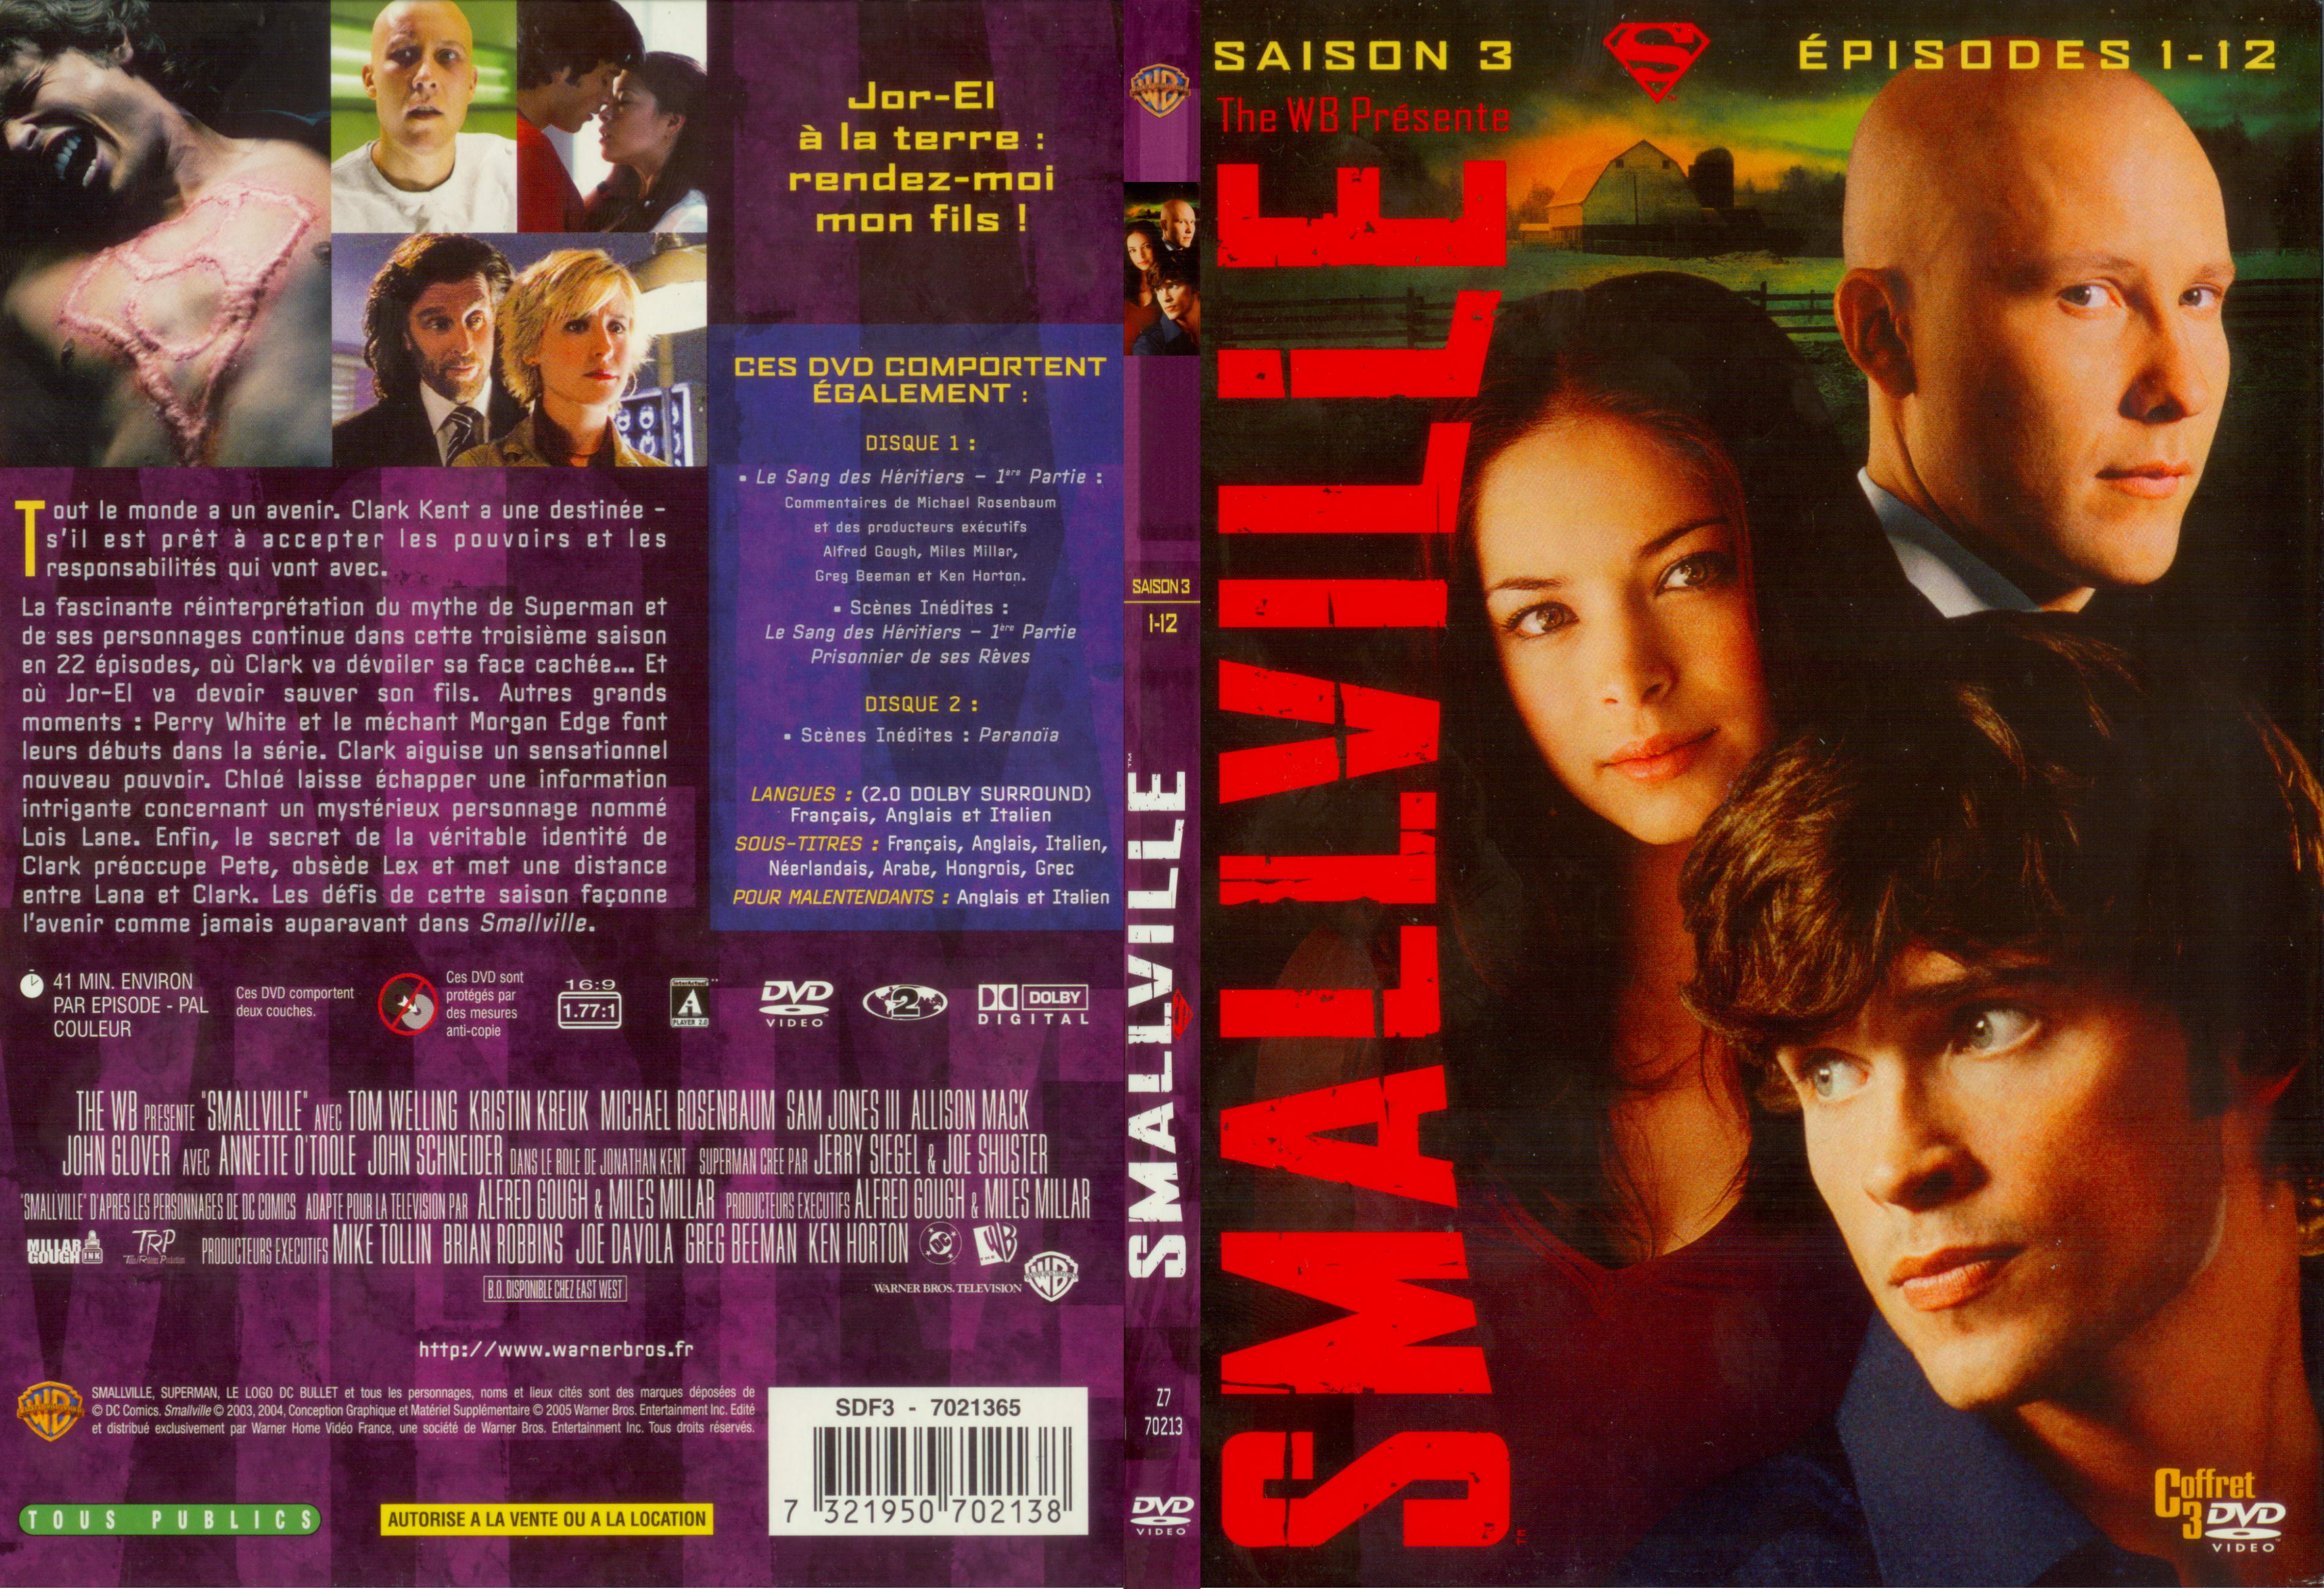 Batista In Smallville